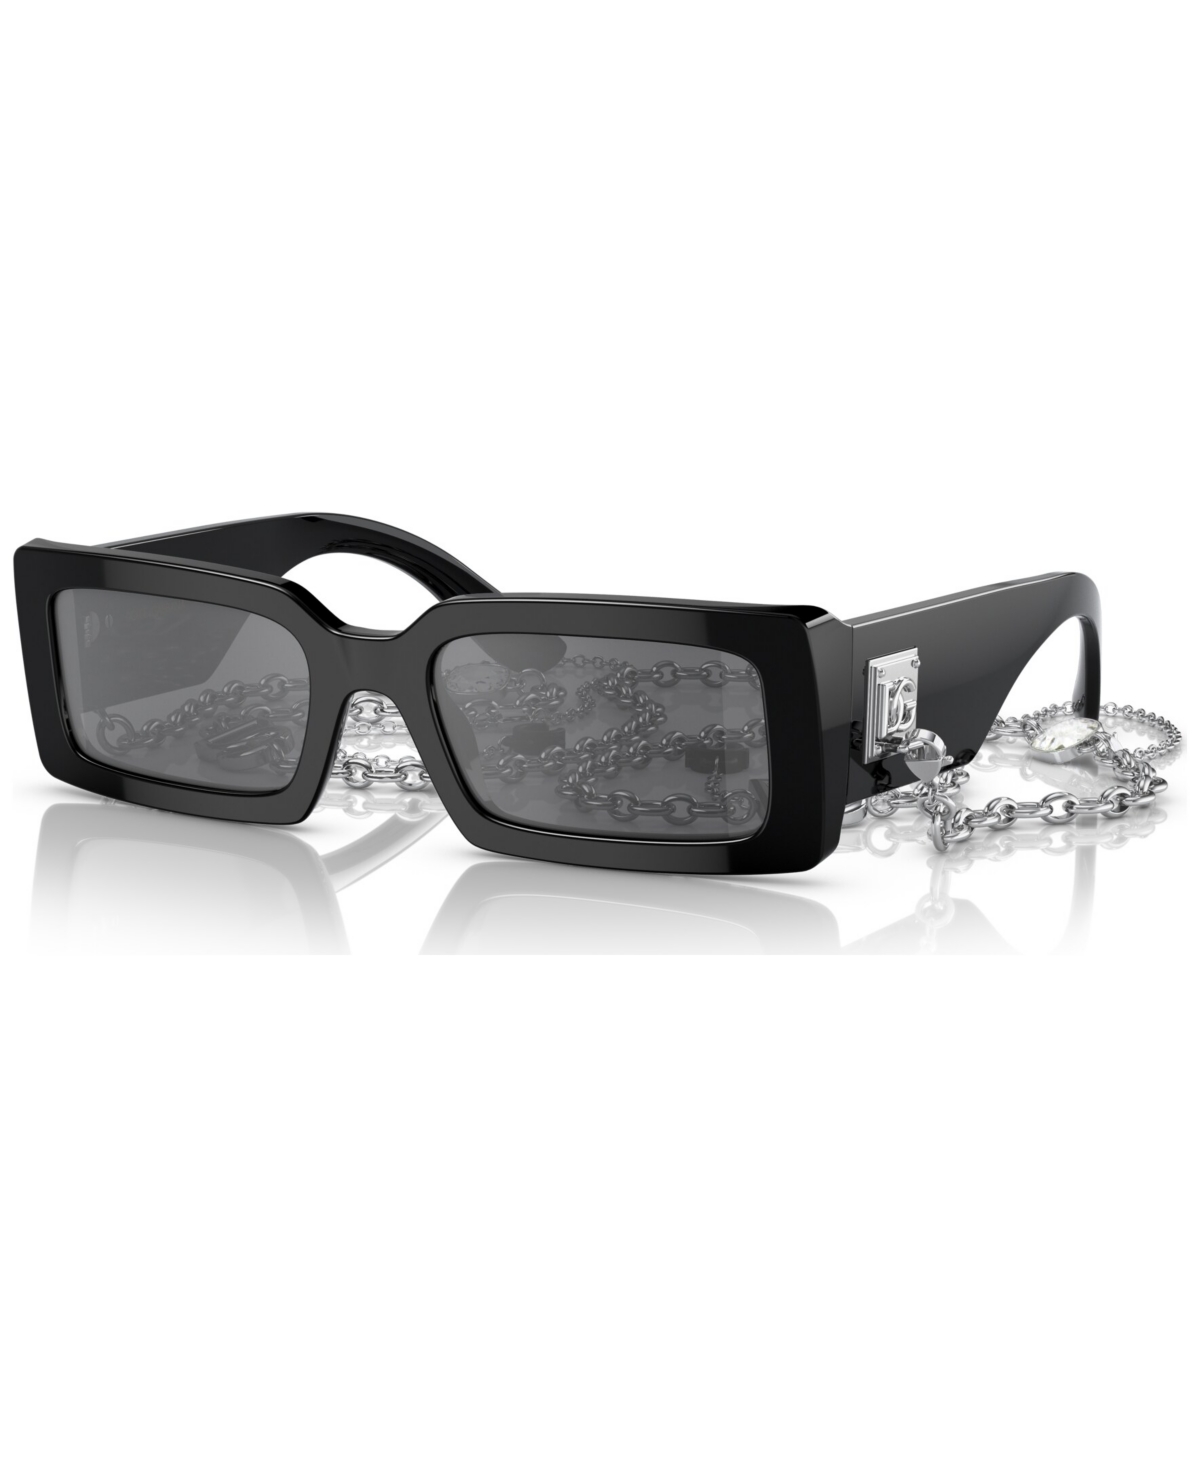 Dolce&Gabbana Women's Sunglasses, DG4416 - Black